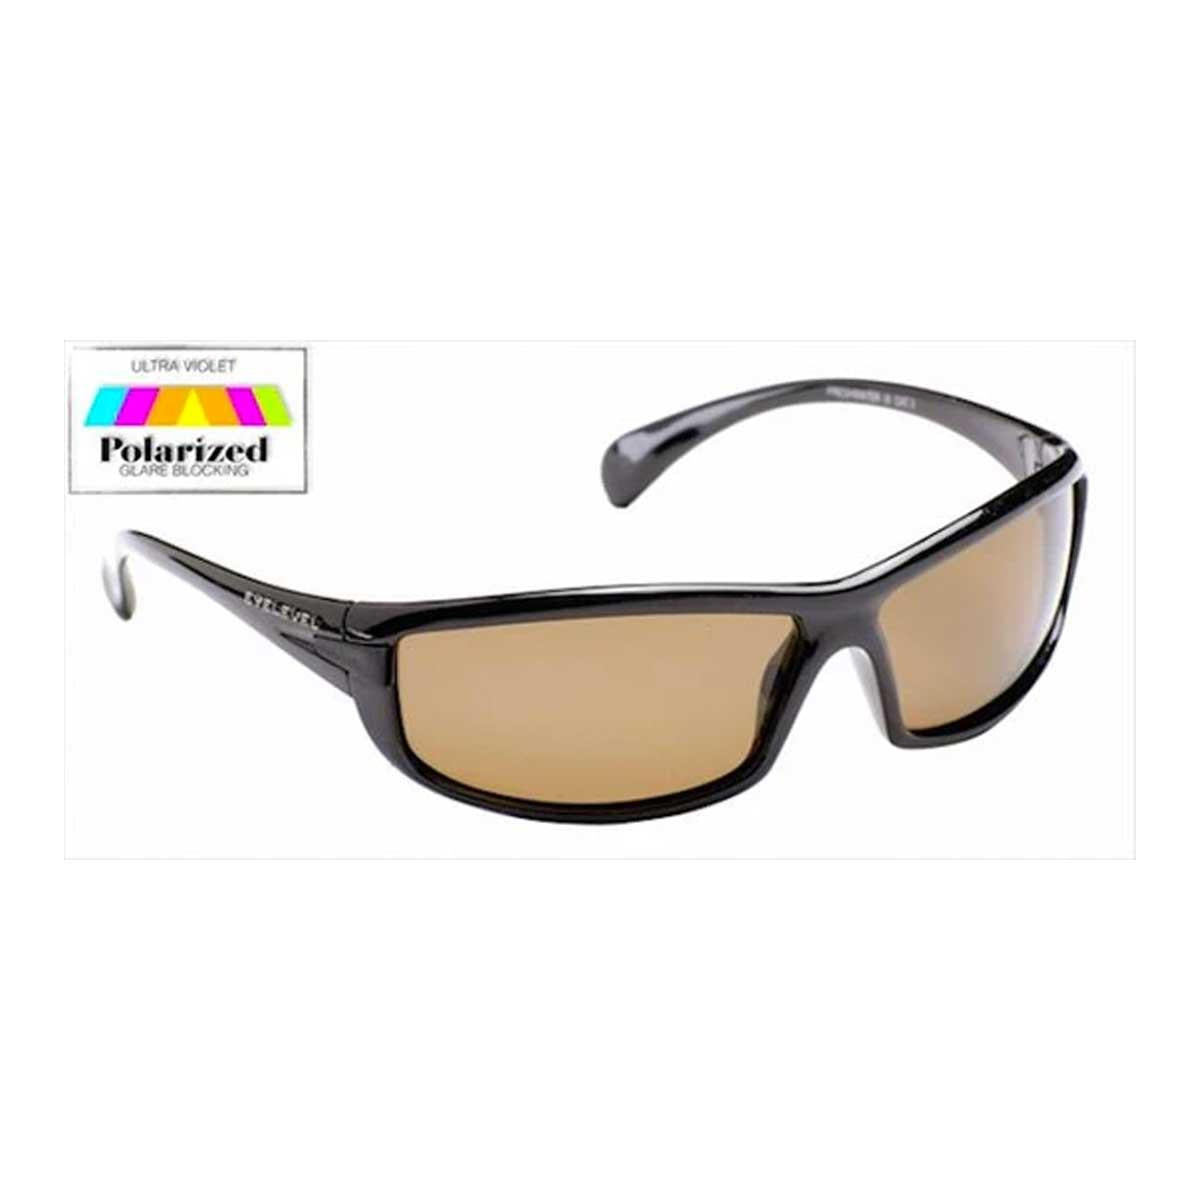 Freshwater Polarized Sunglasses - Brown Lens